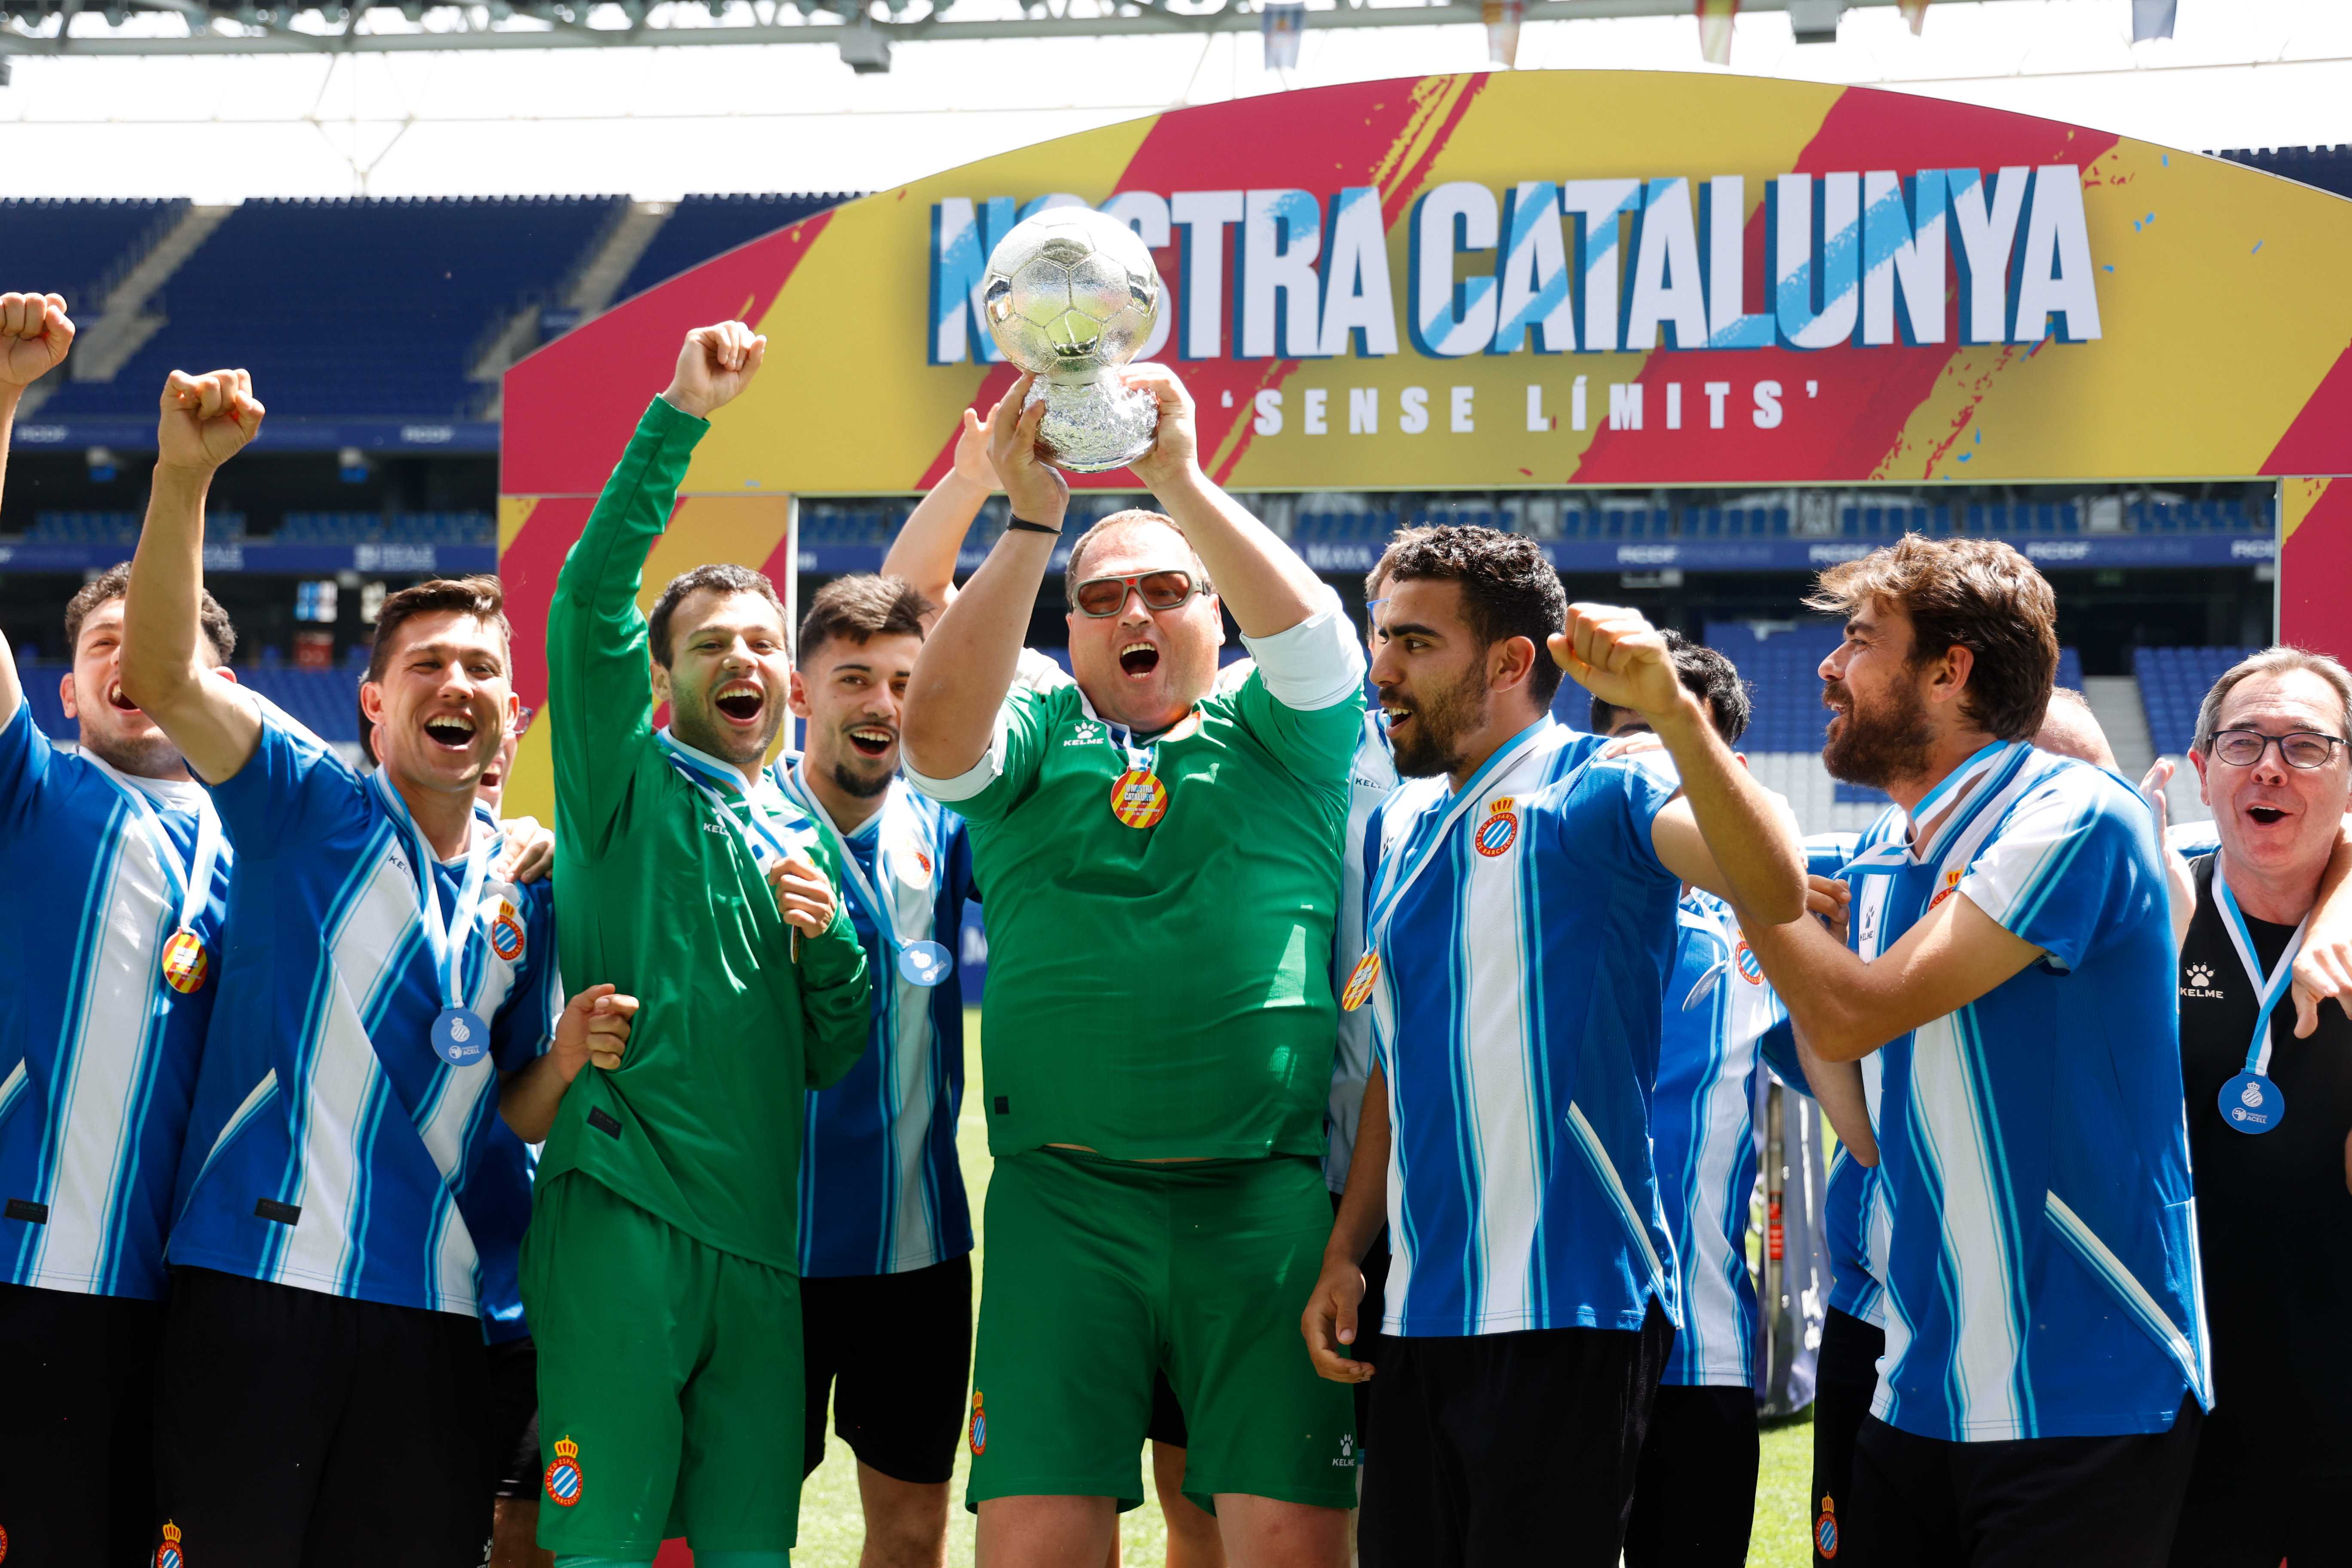 RCDE Stadium hosts 'Nostra Catalunya Sense Límits' tournament